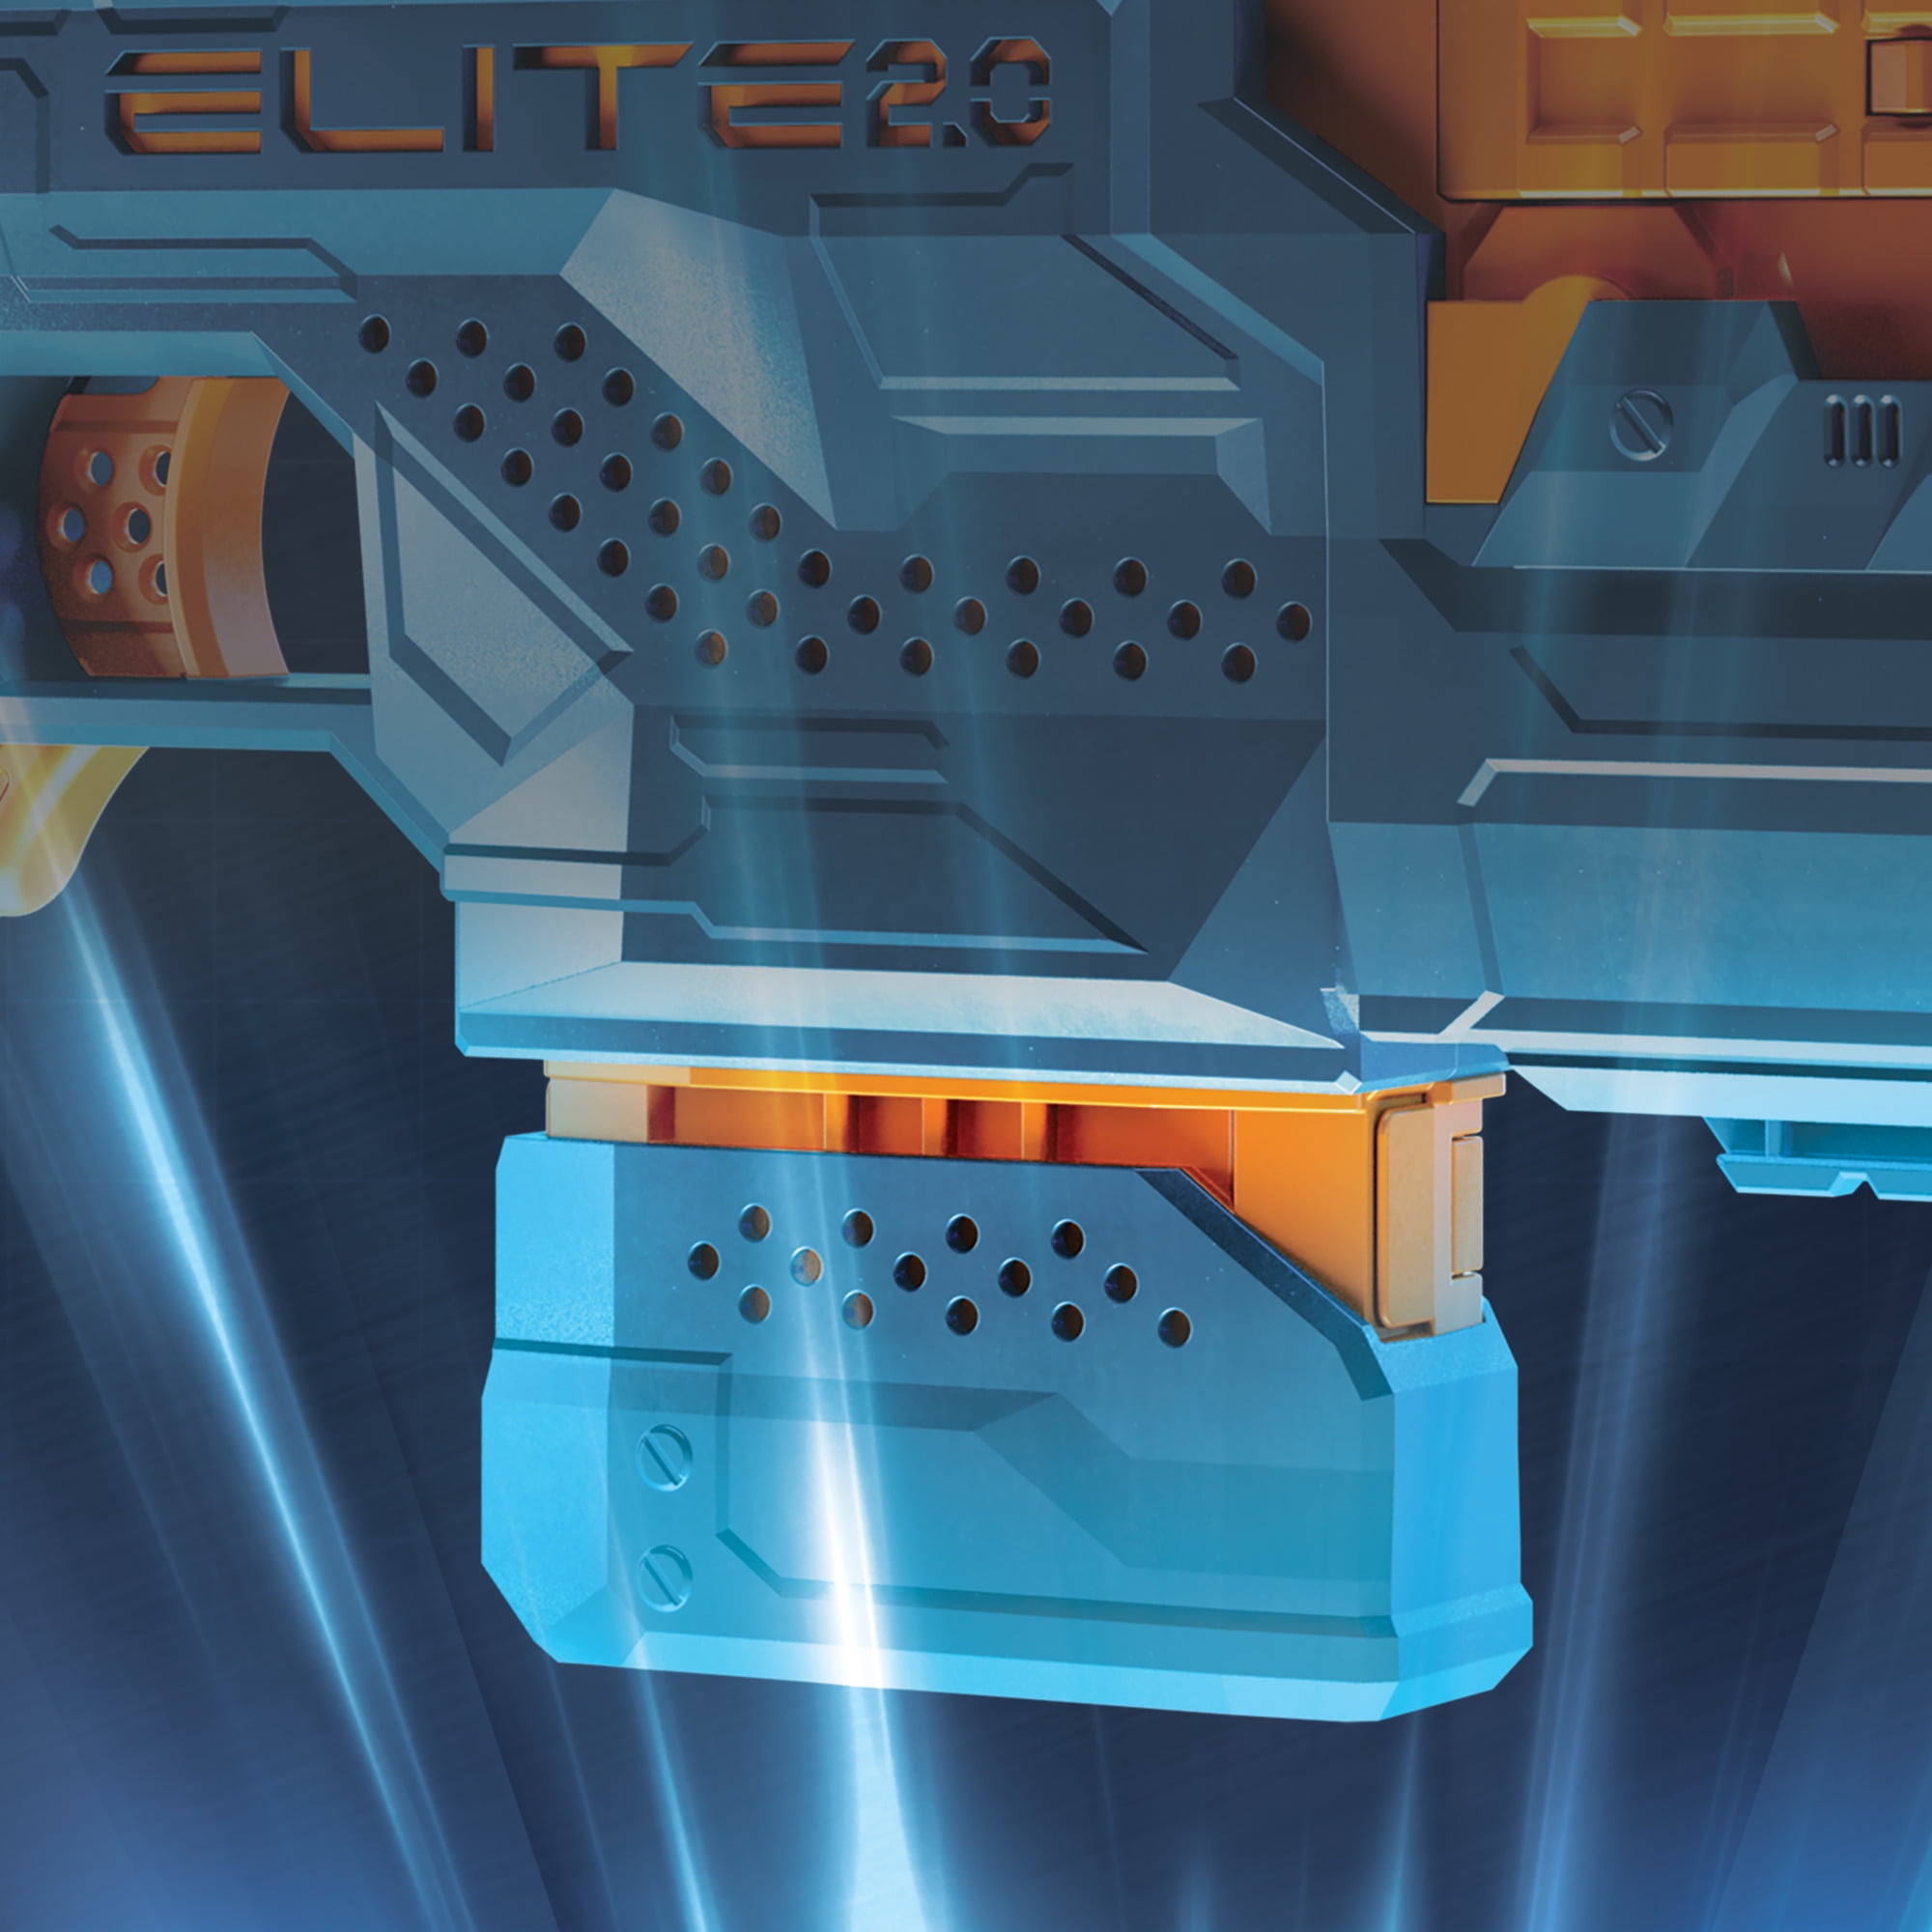 Nerf Elite 2.0 Star Phoenix CS-6, Includes 12 Official Nerf Darts